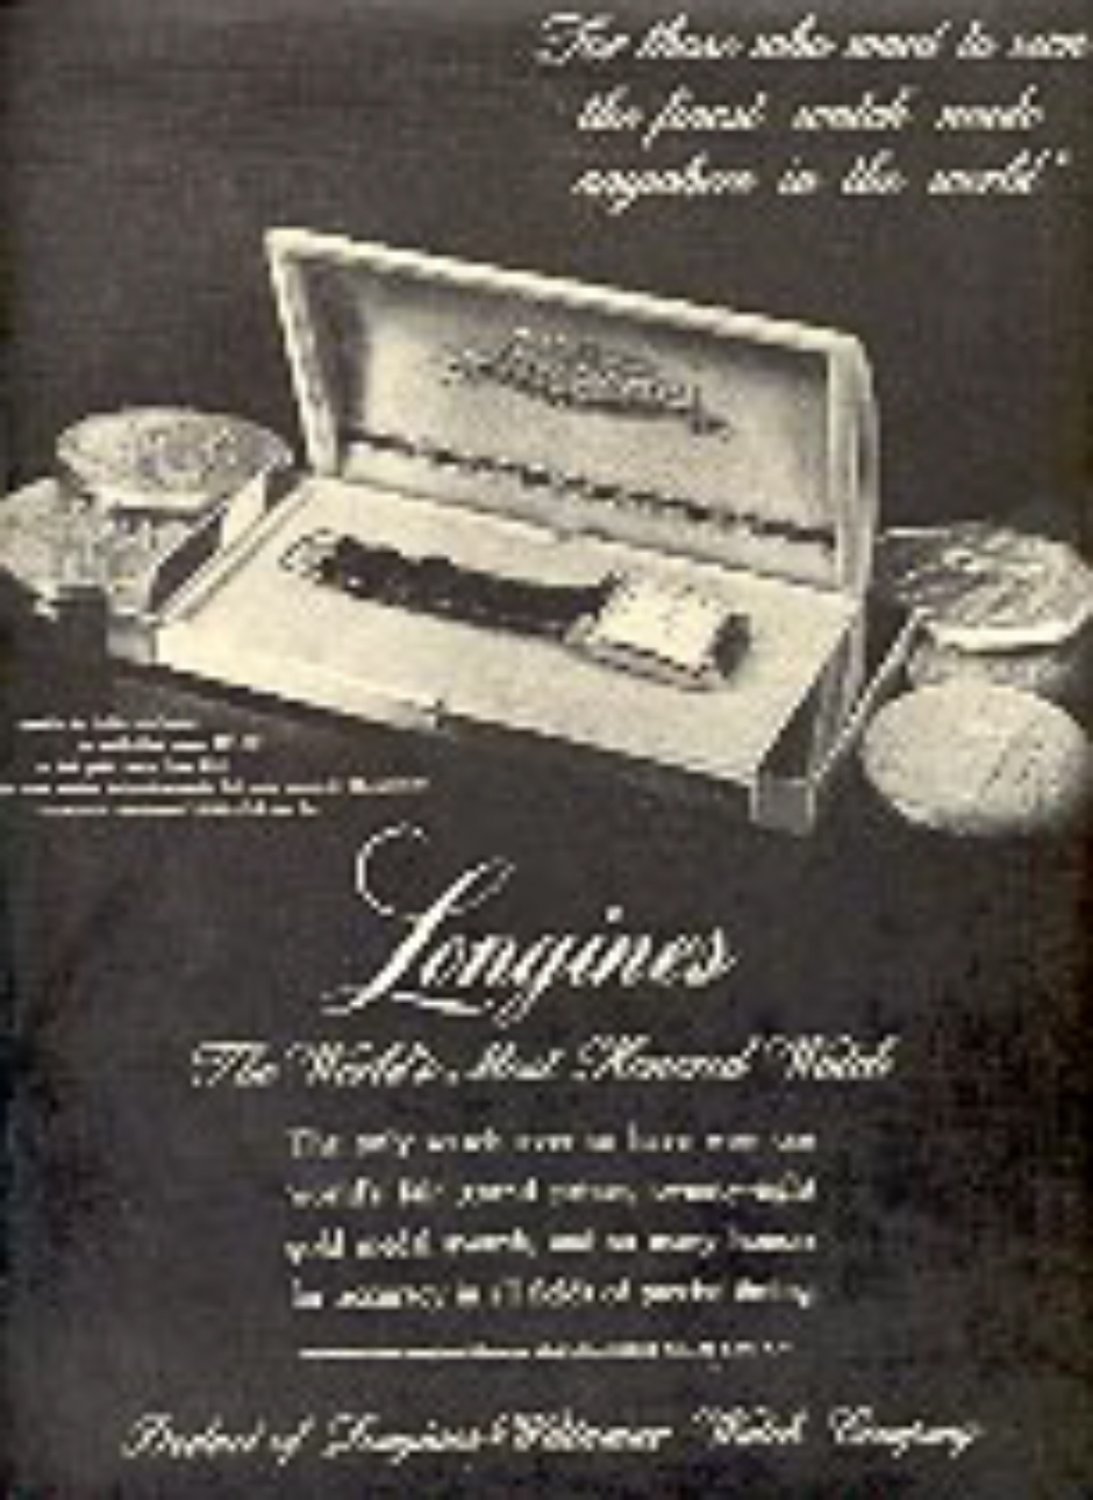 1947 Longines Wittnauer Watch Company magazine ad (# 2821)